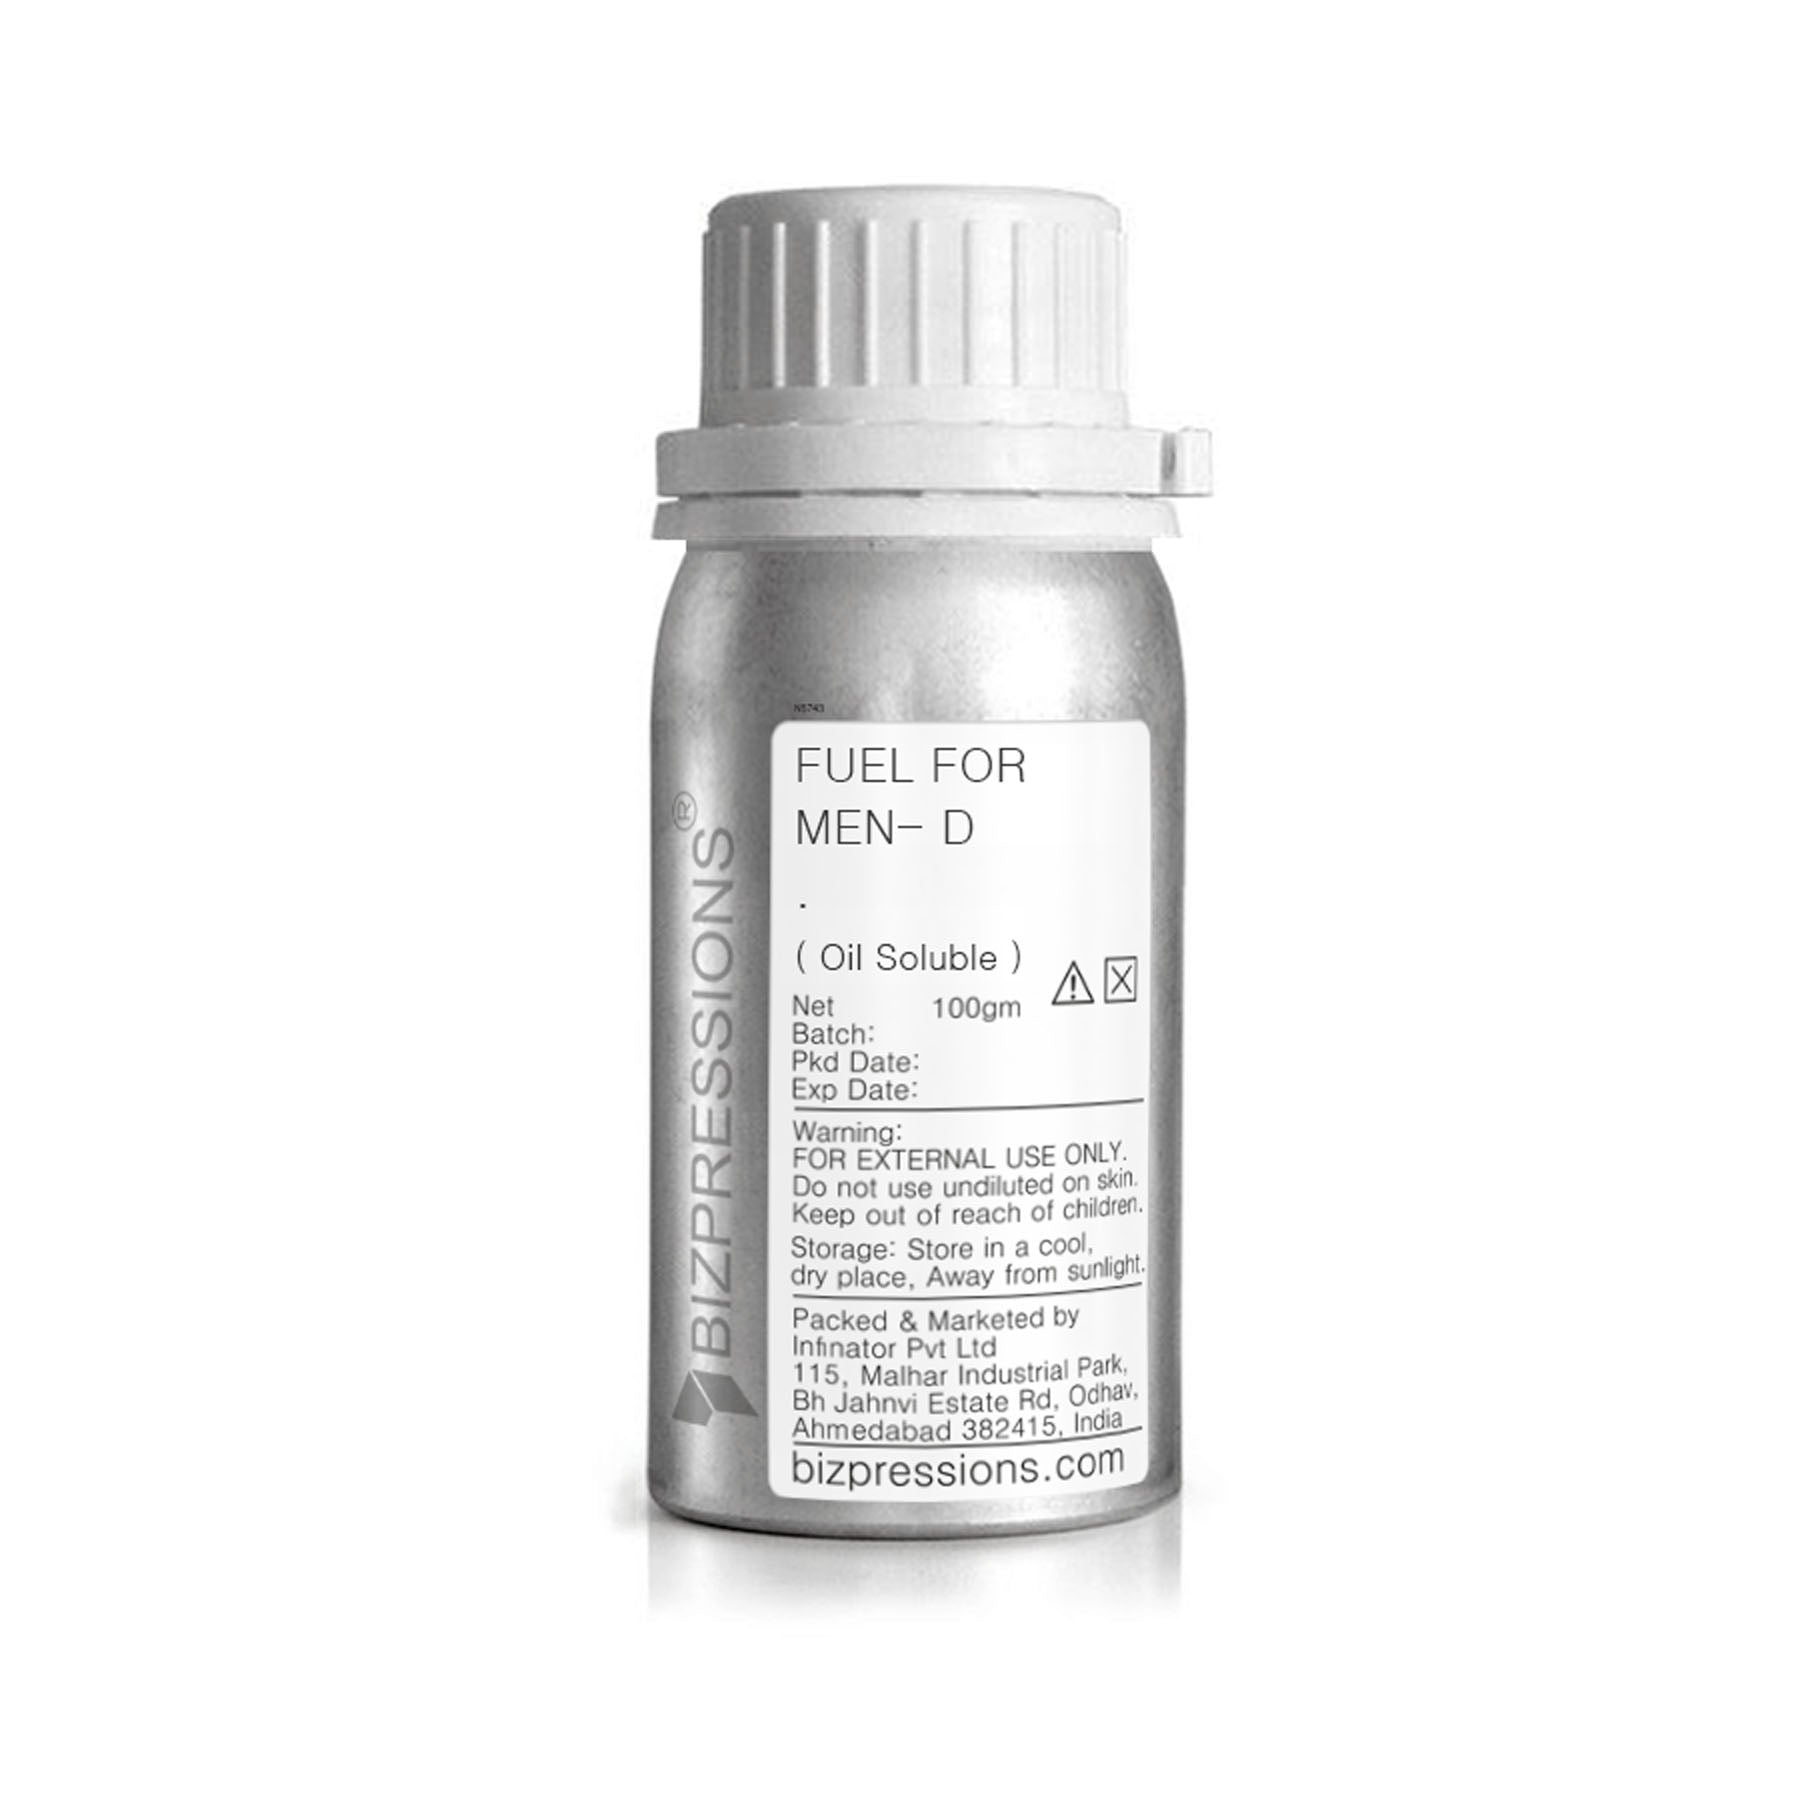 FUEL FOR MEN- D - Fragrance ( Oil Soluble ) - 100 gm